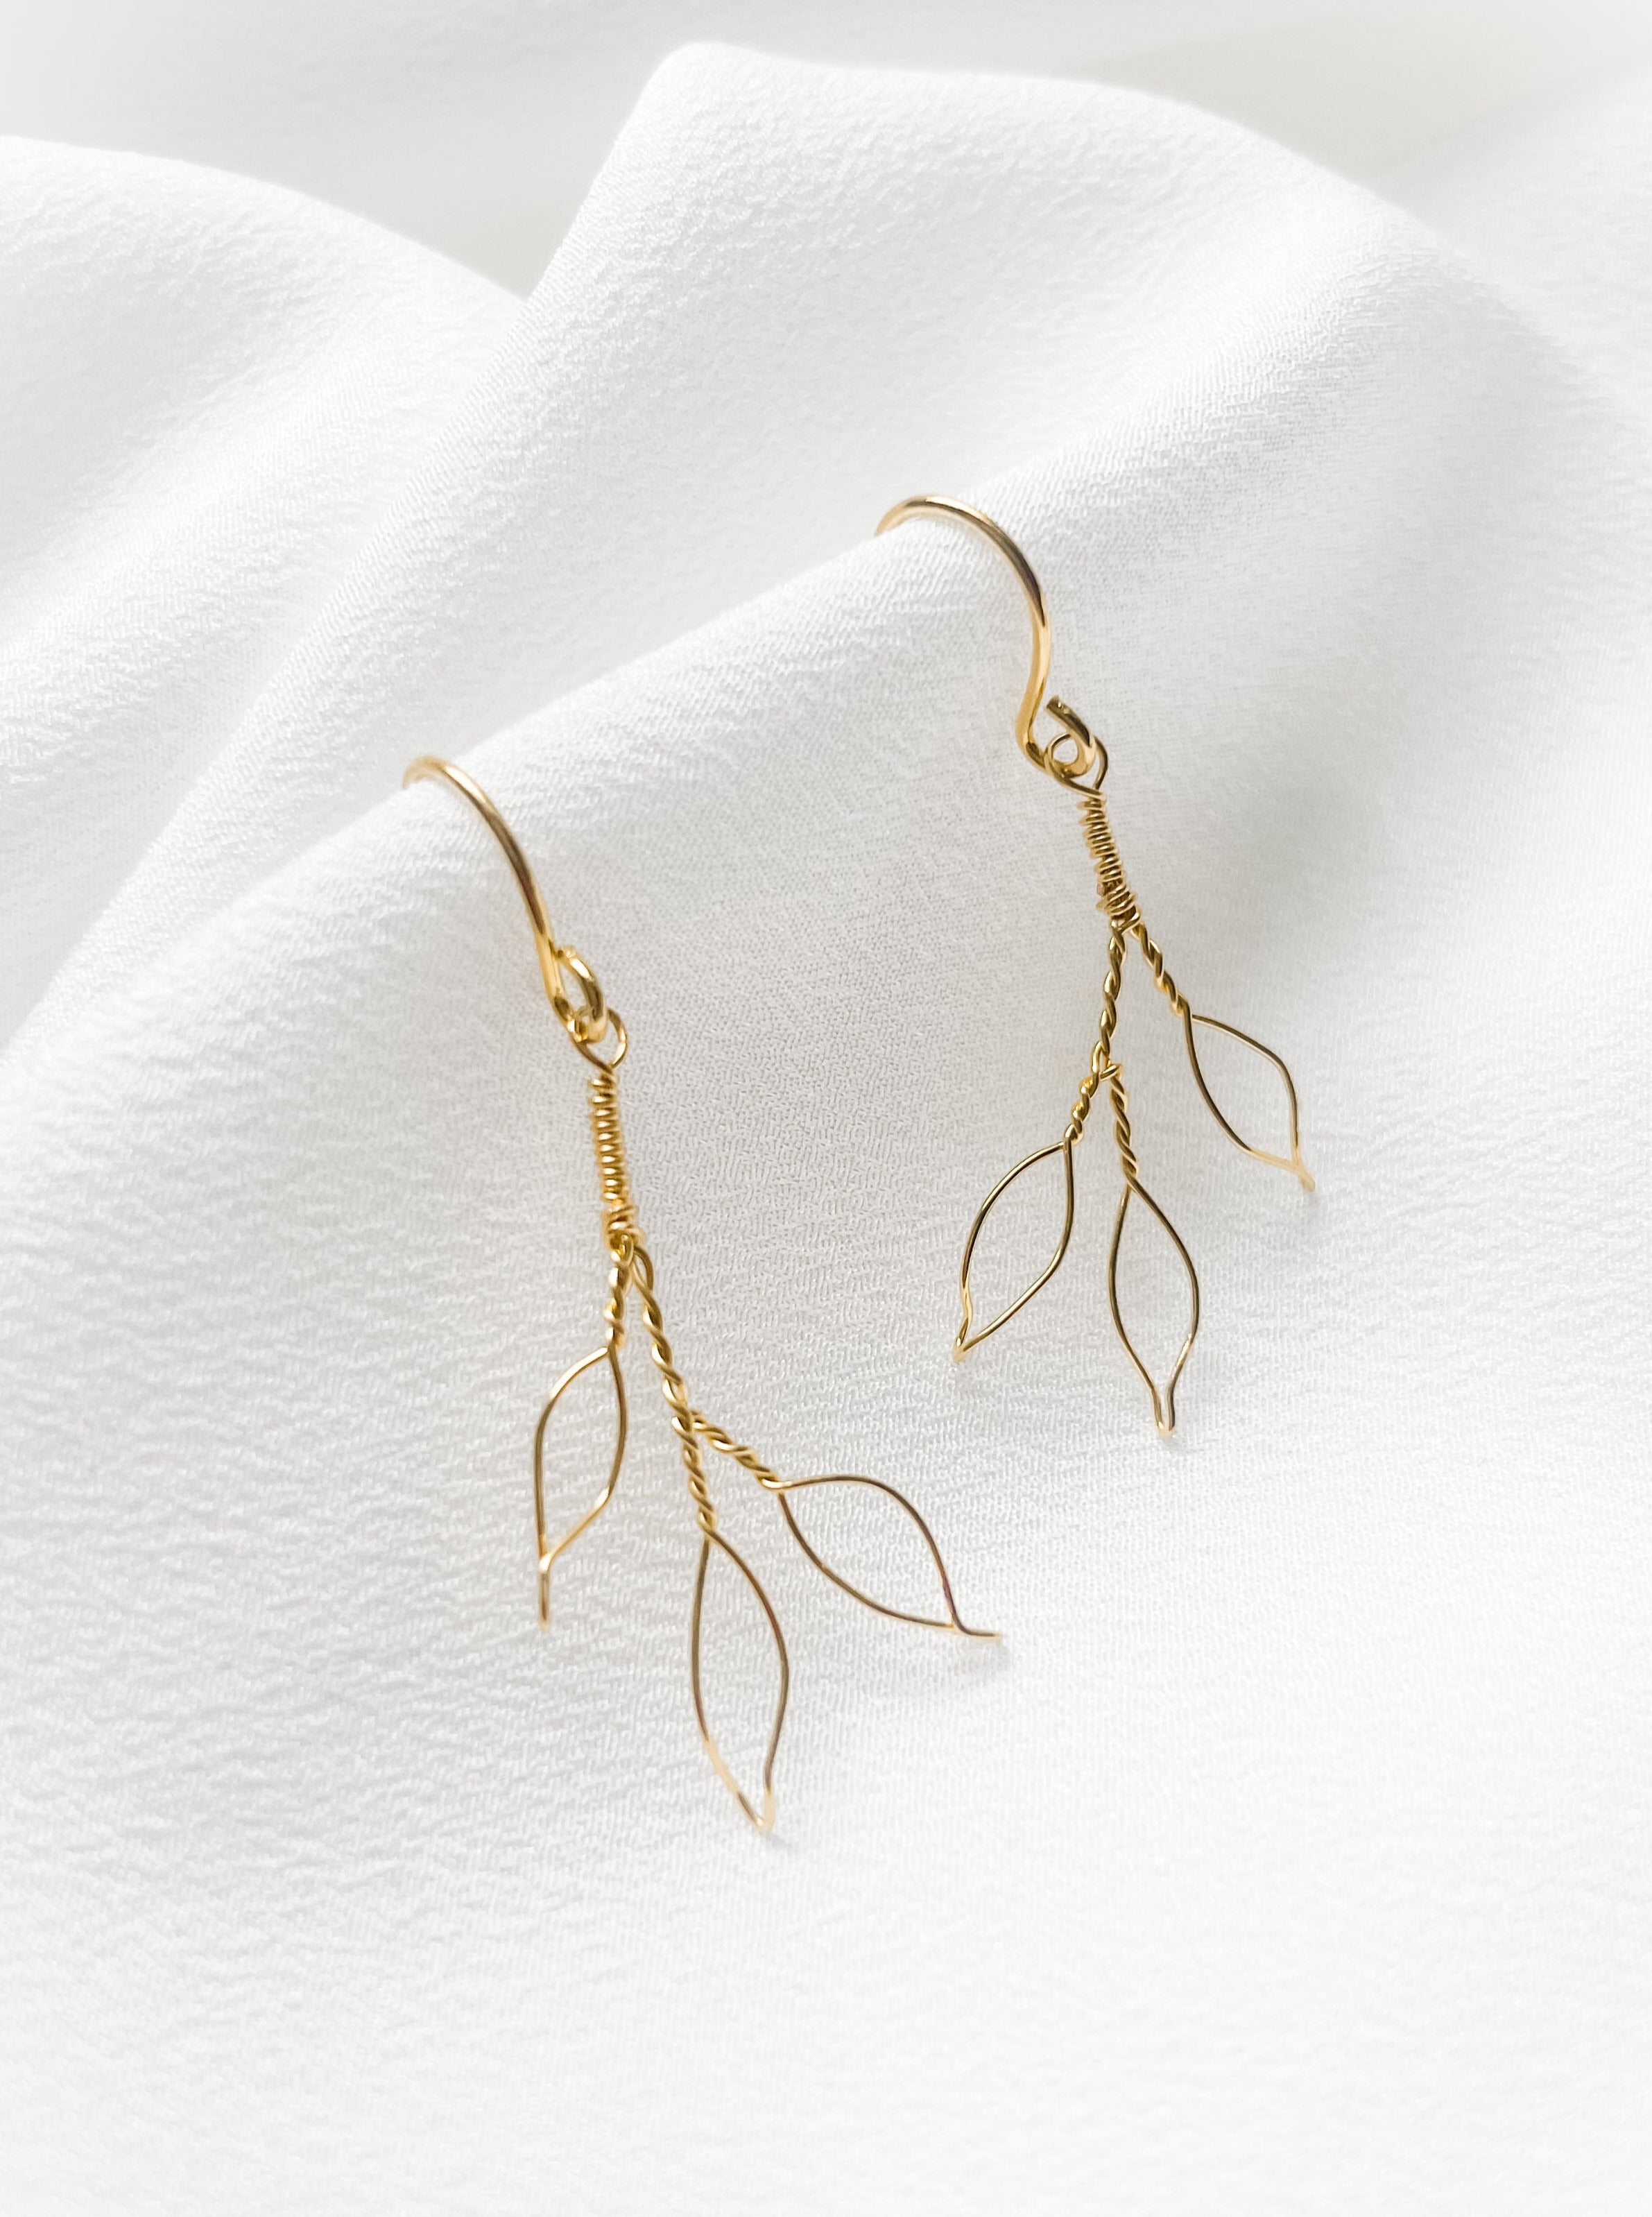 Liv delicate gold wire leaf earrings debbiecarlisle.com £25 (3)